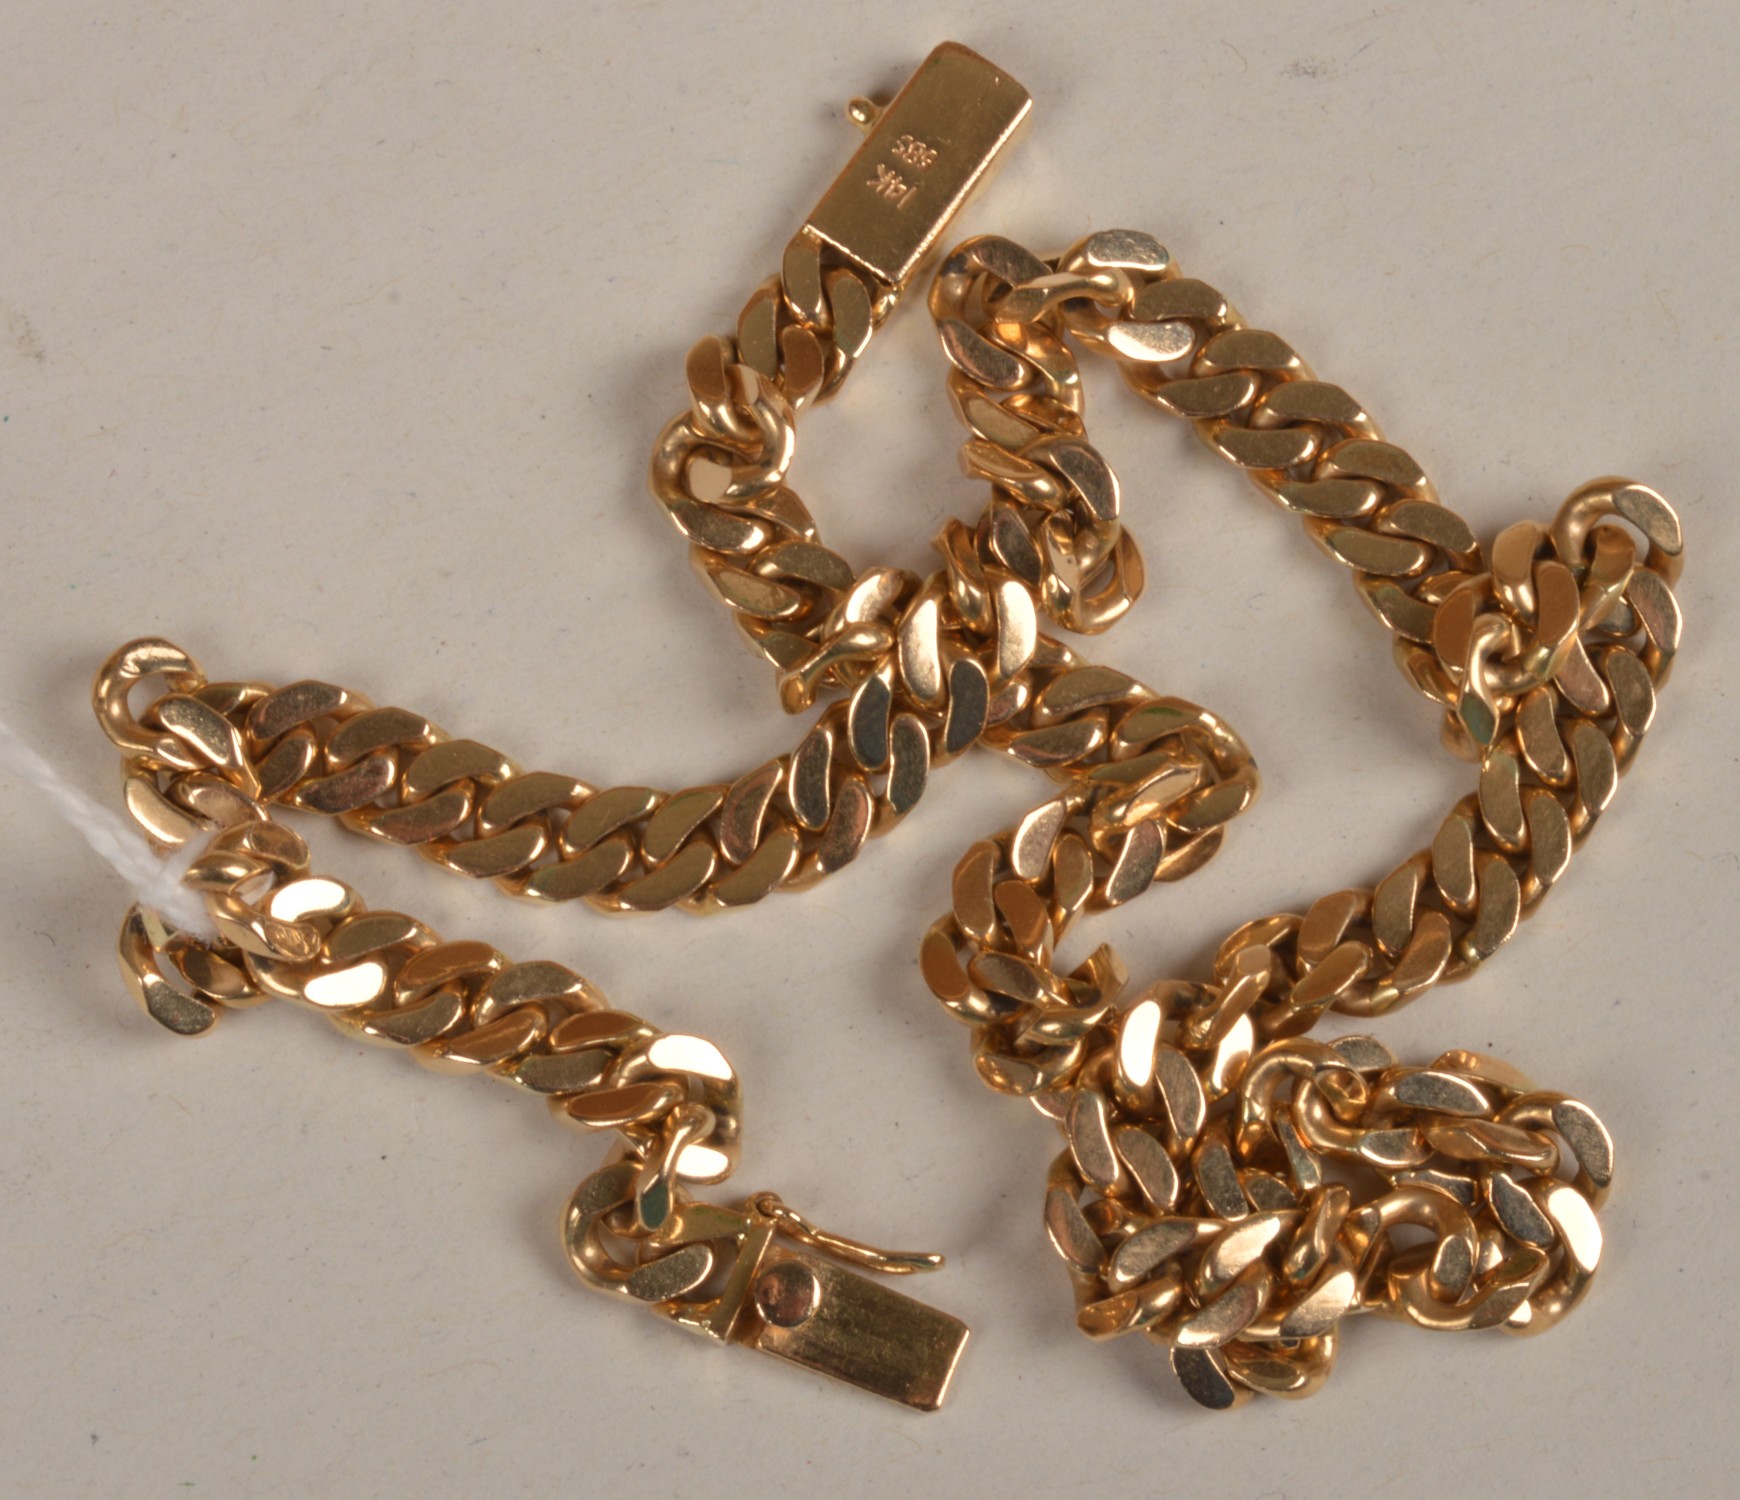 A flattened curblink neckchain, on a rectangular snap clasp, necklace length 38cm, weight 42g